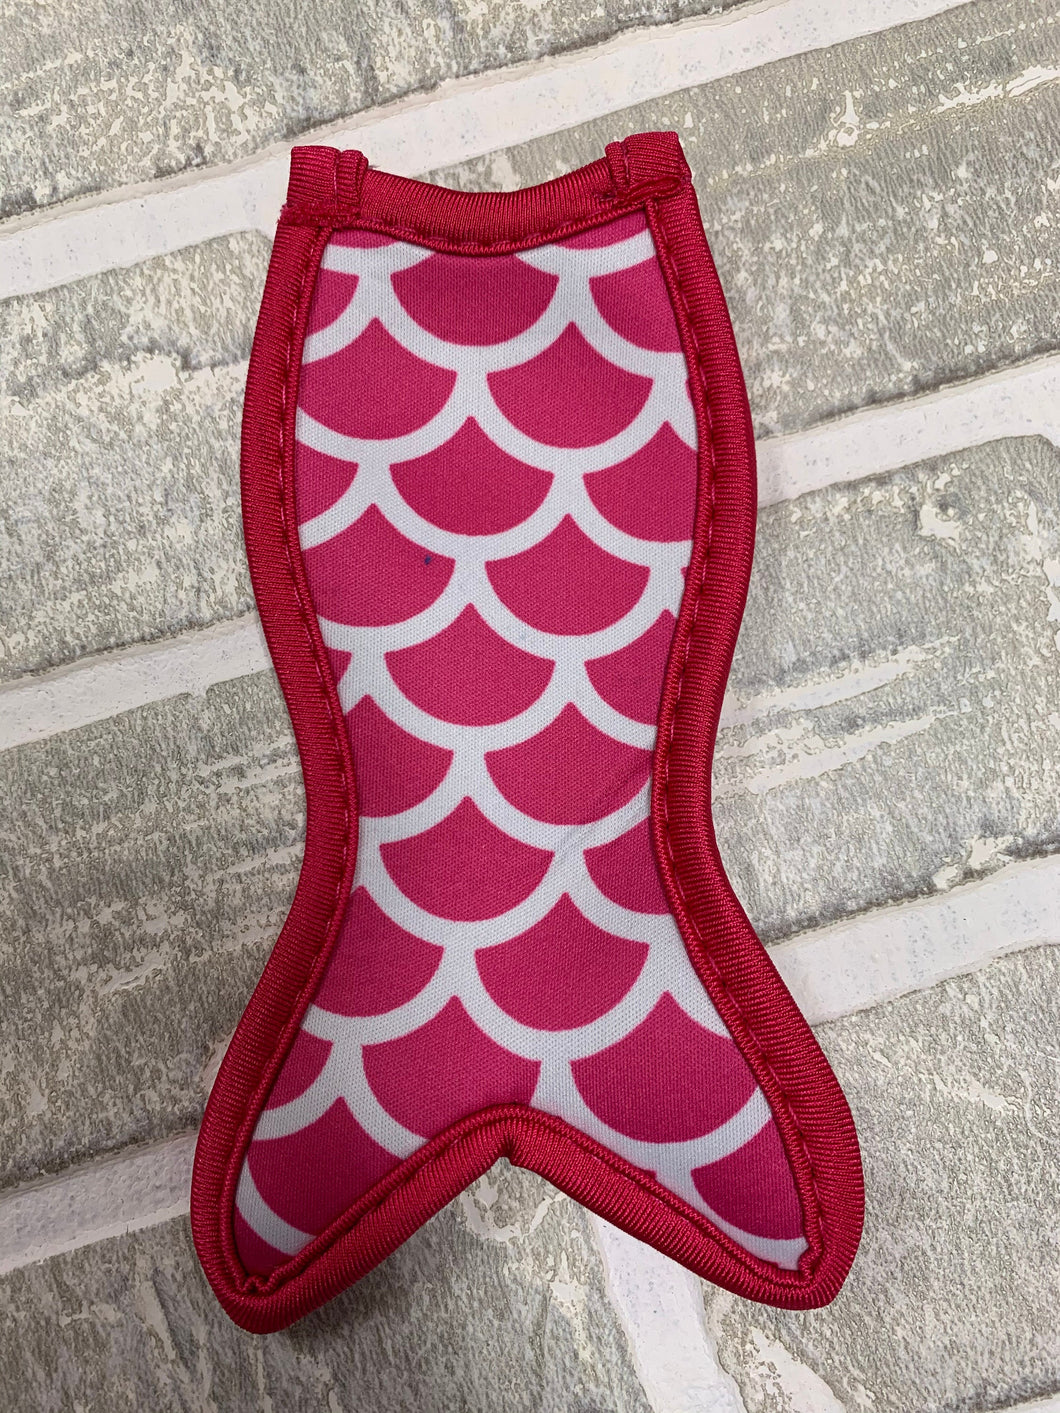 Hot pink mermaid popsicle holder blanks